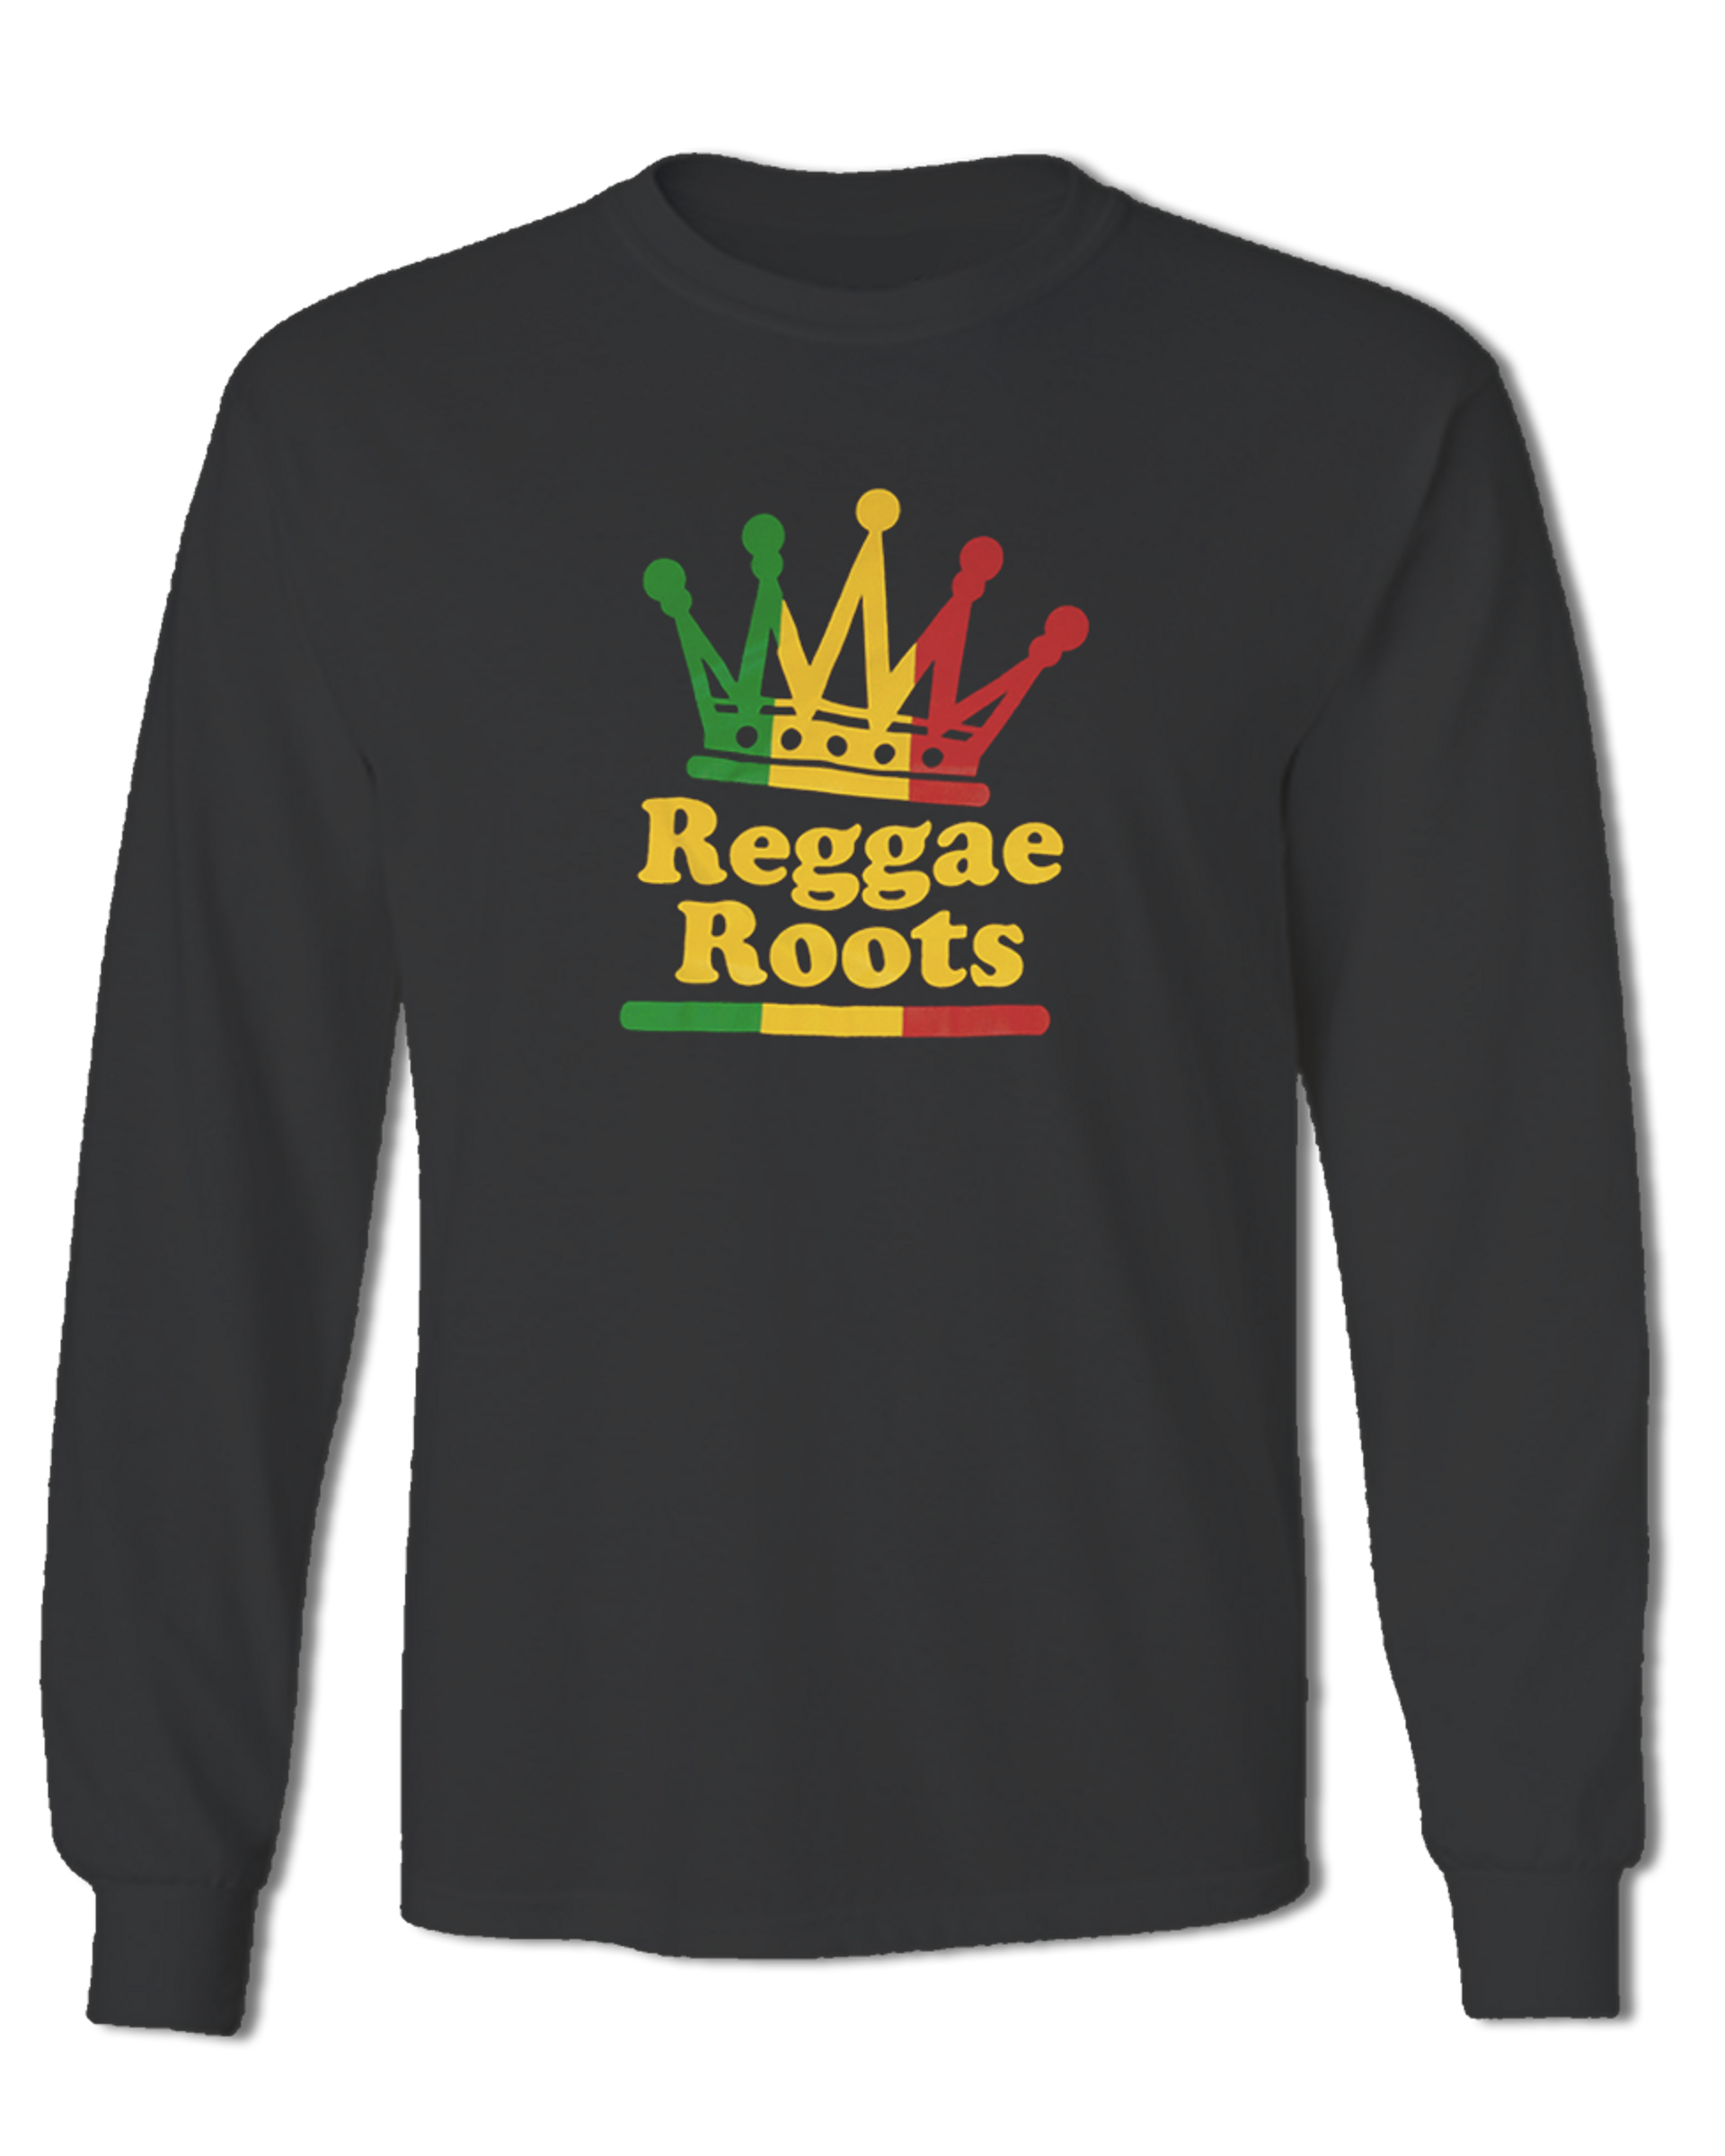 Reggae Roots - VP Reggae